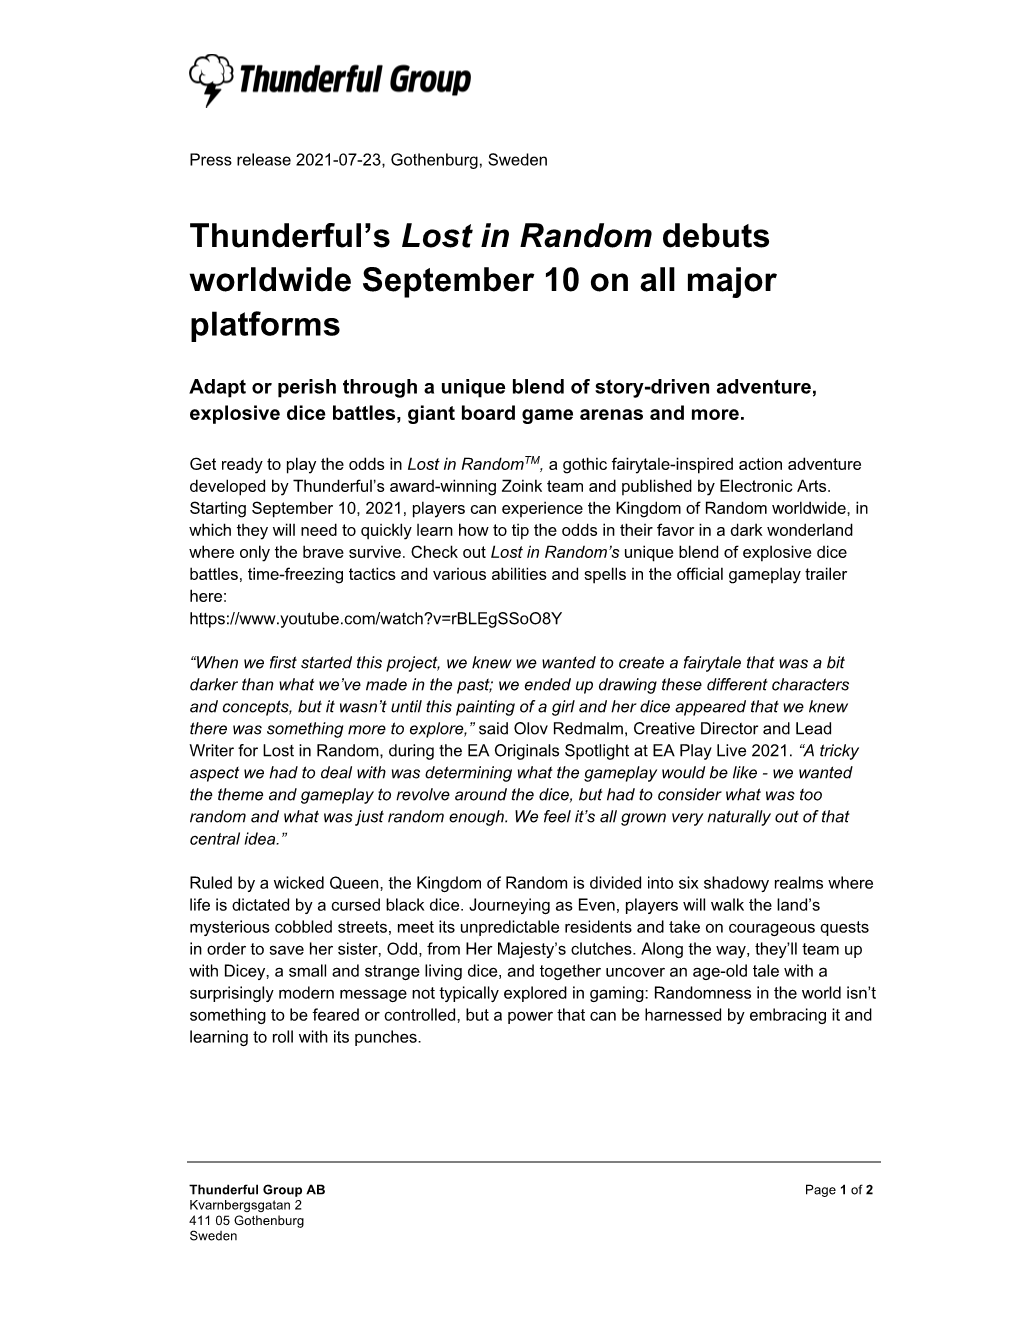 Thunderful's Lost in Random Debuts Worldwide September 10 on All